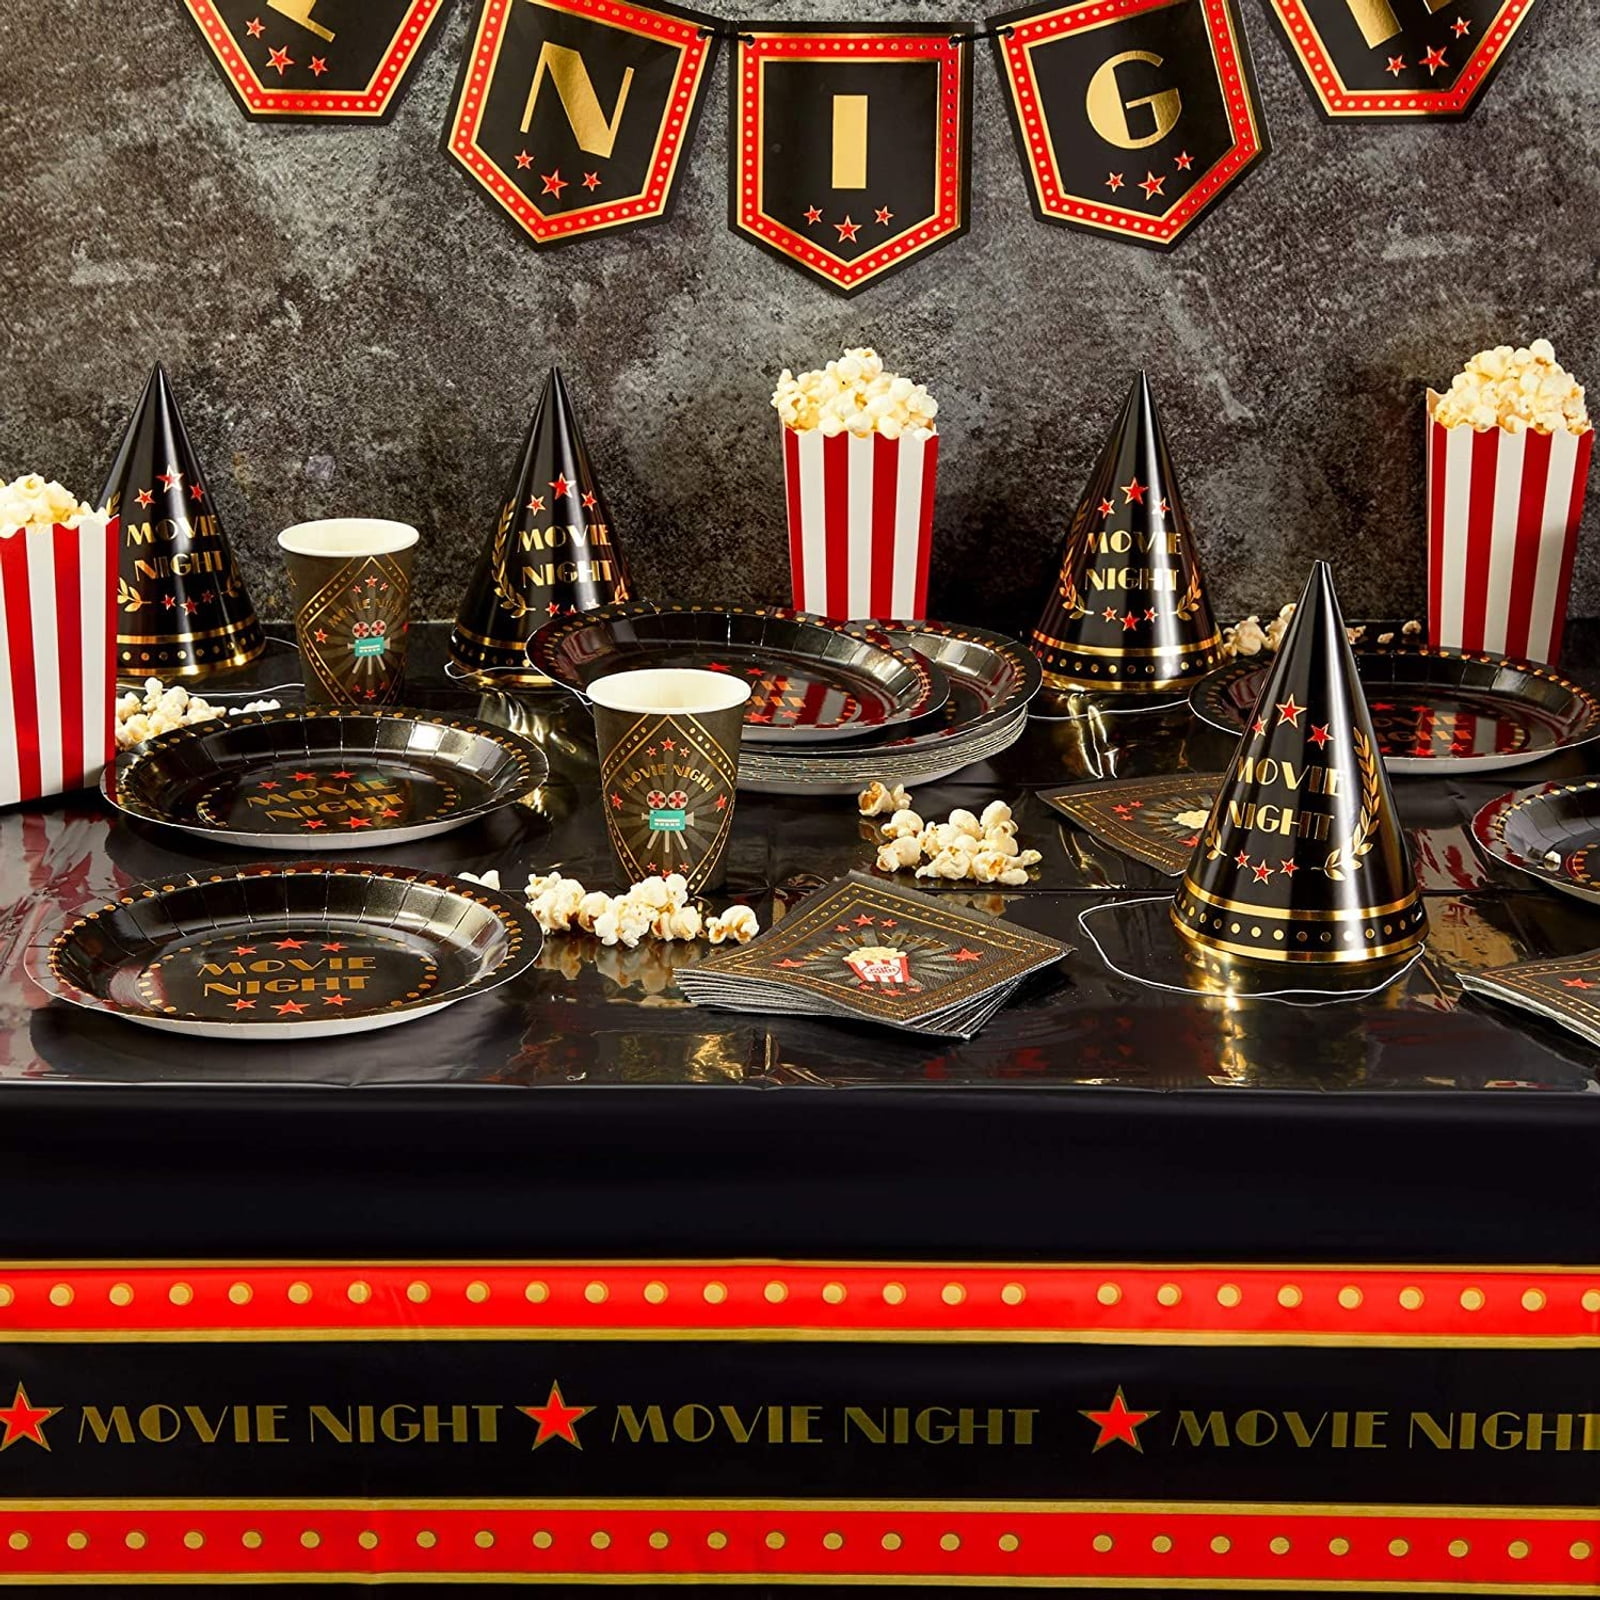  95pcs Movie Night Decorations, Movie Theme Party